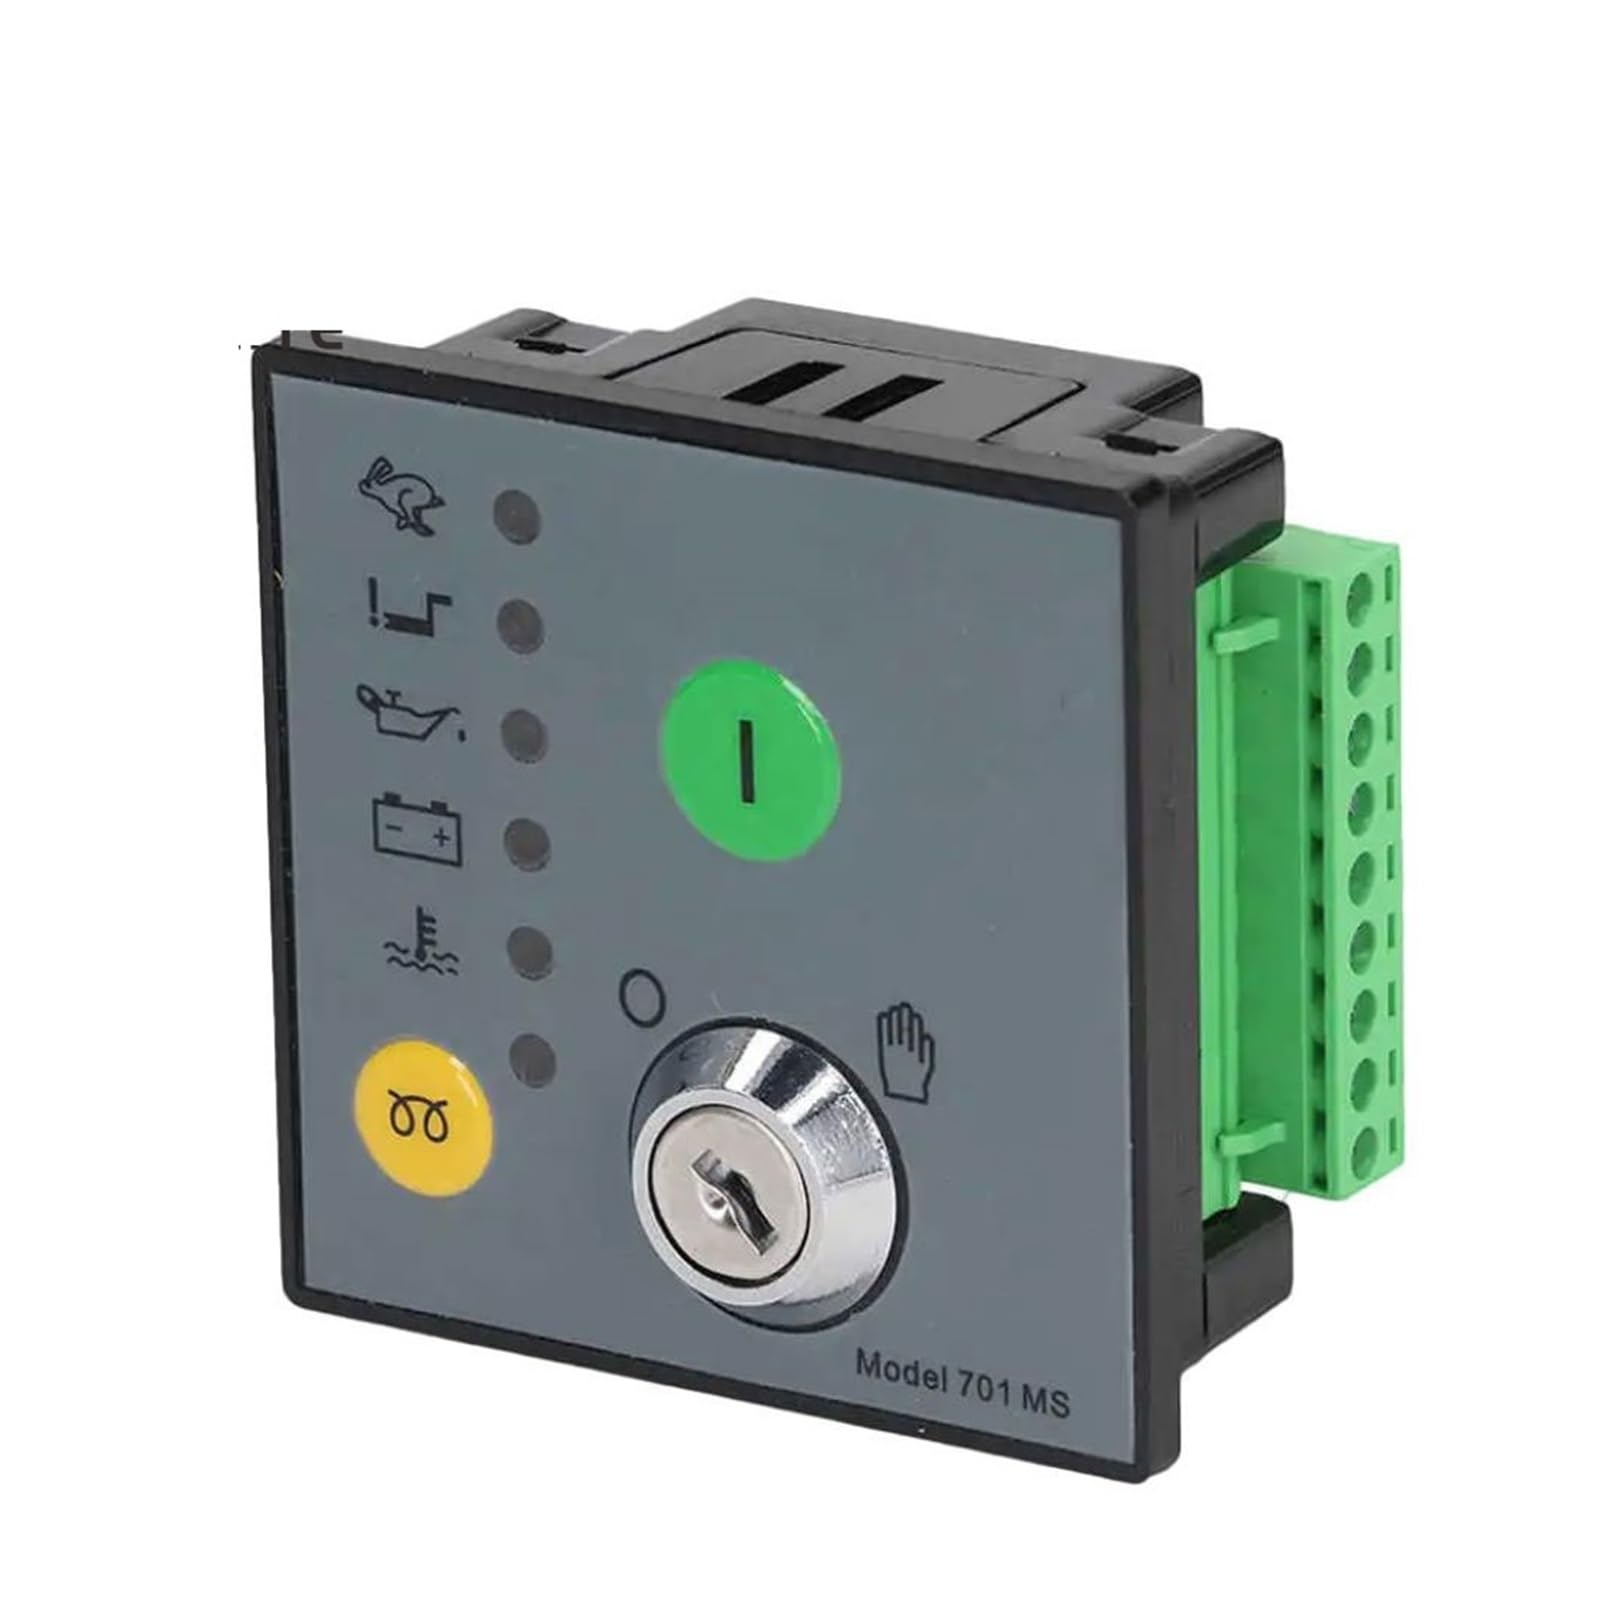 PKHDLYEU Generator Controller DSE701AS Generator-Steuergerät mit manuellem Start, LED, kompakt, geräuscharm, robuste Konstruktion von PKHDLYEU